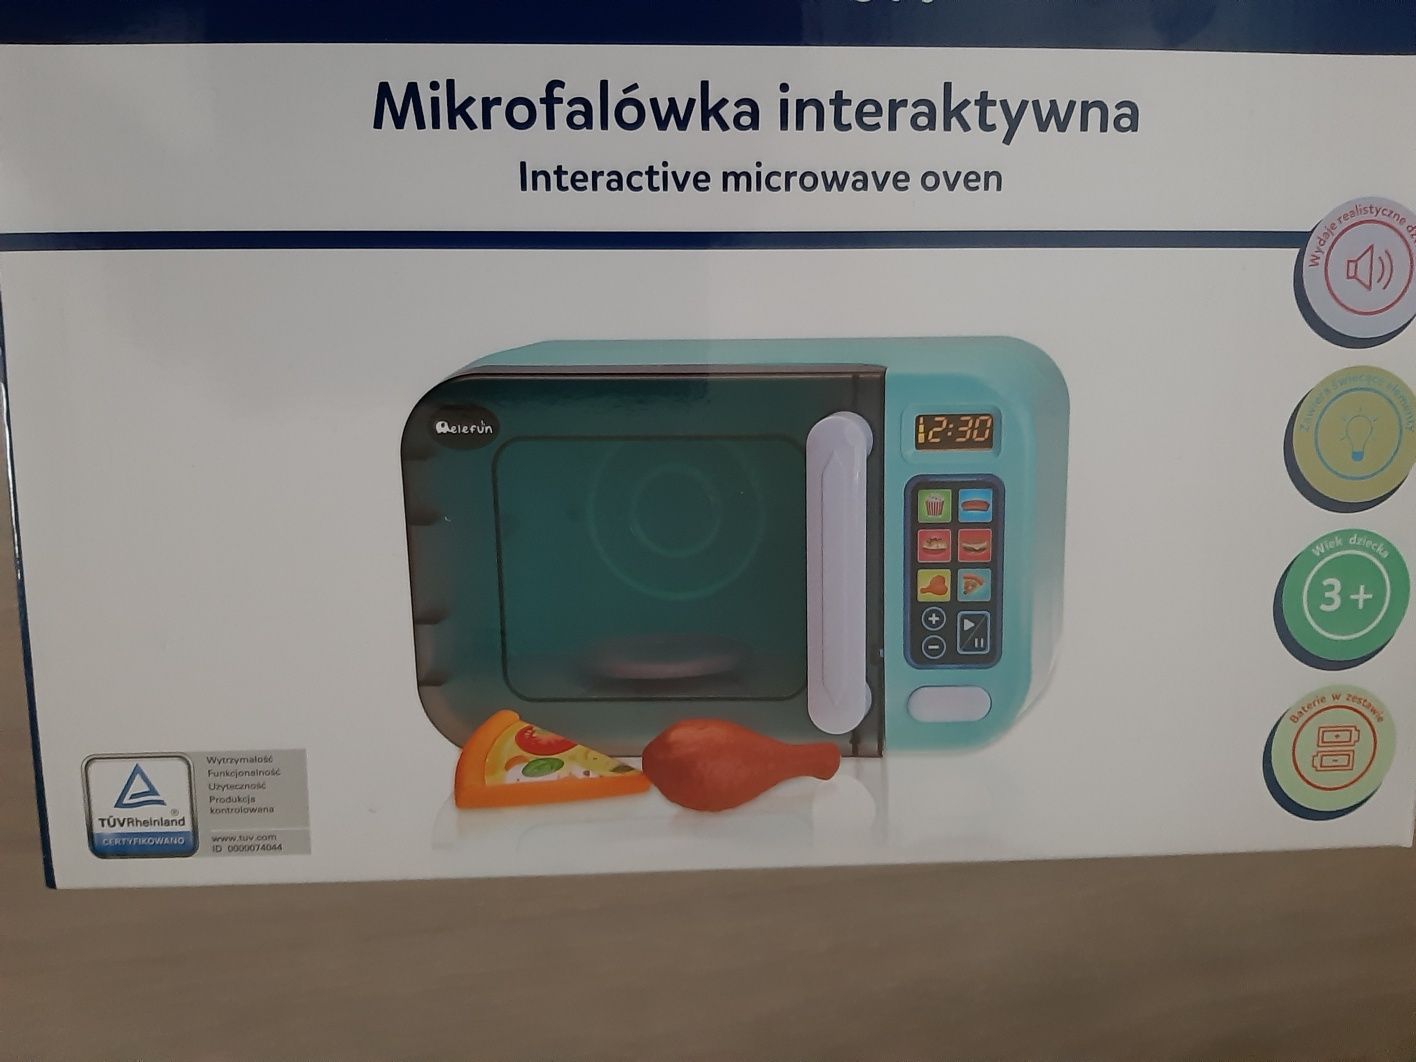 Kuchenka mikrofalowa interaktywna nowa